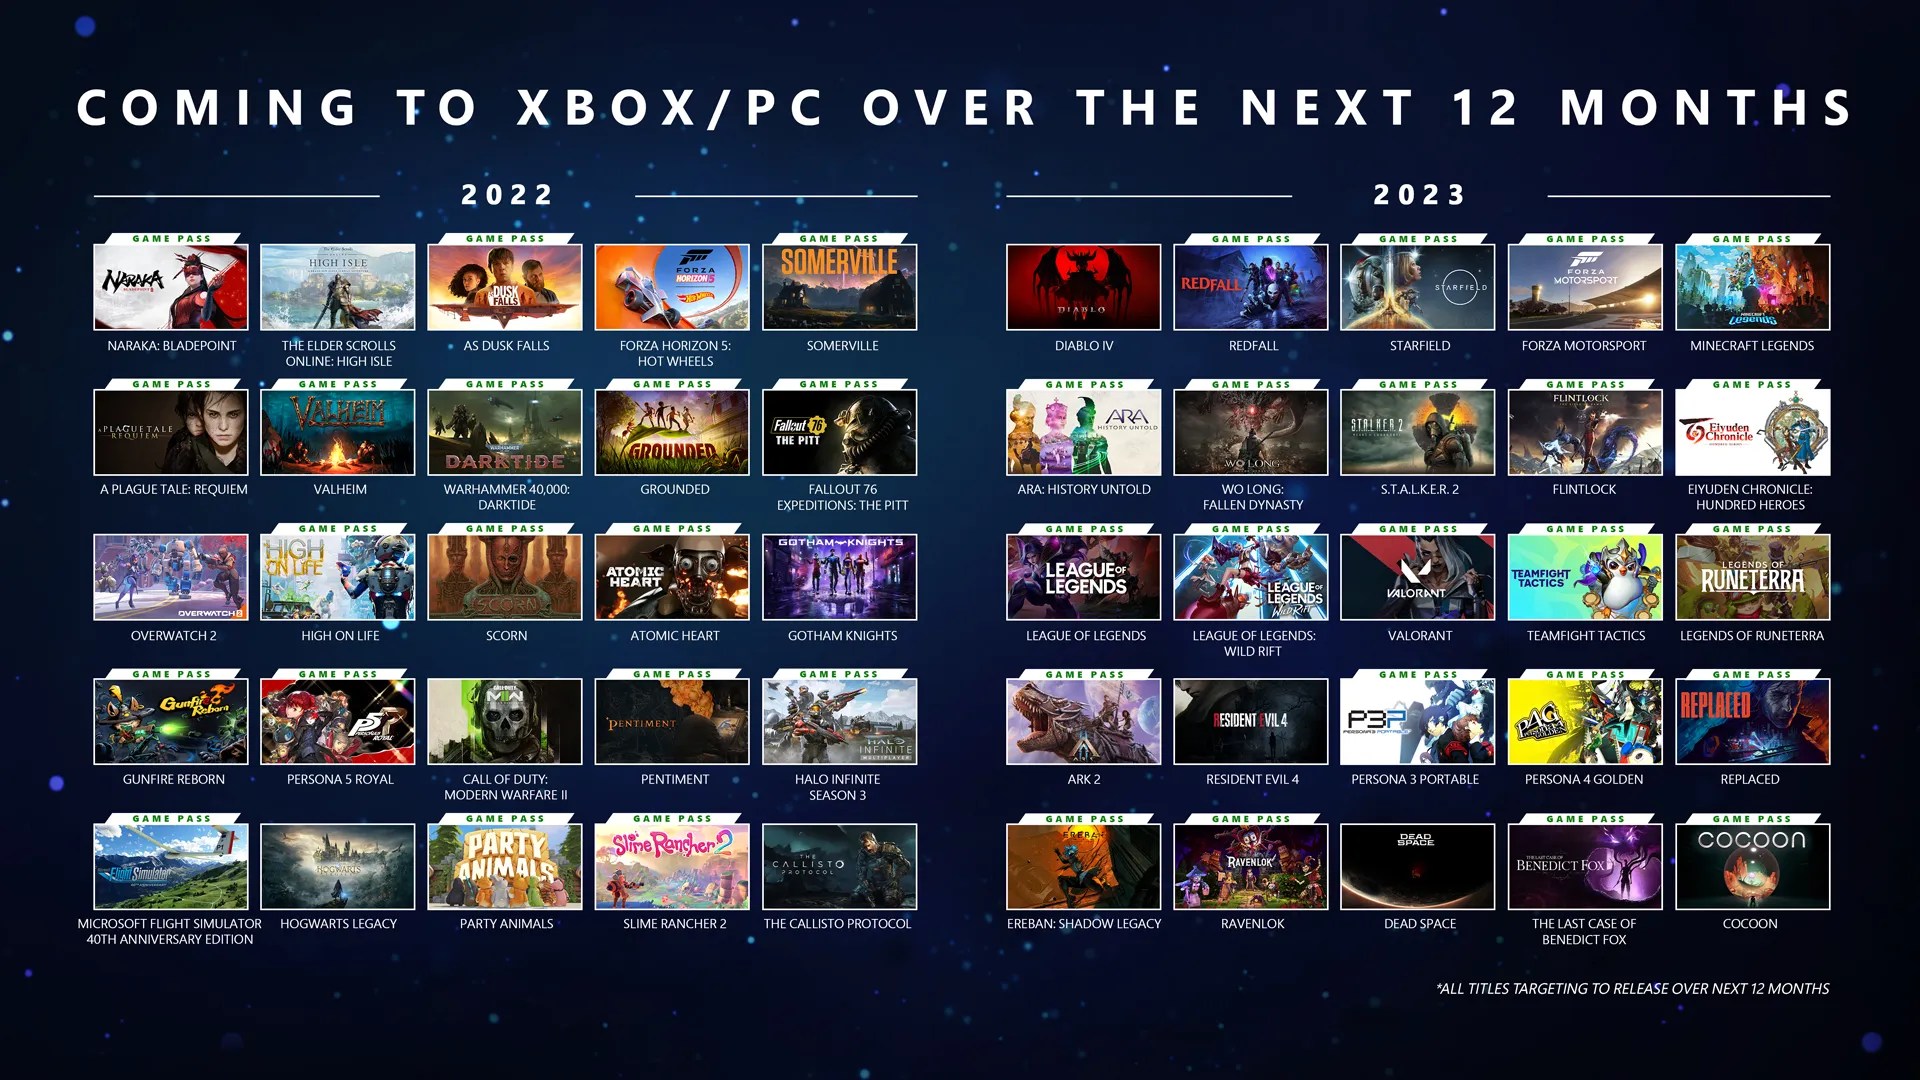 Steam Xbox Game Studios Publisher Sale 2023 - Save big on Halo